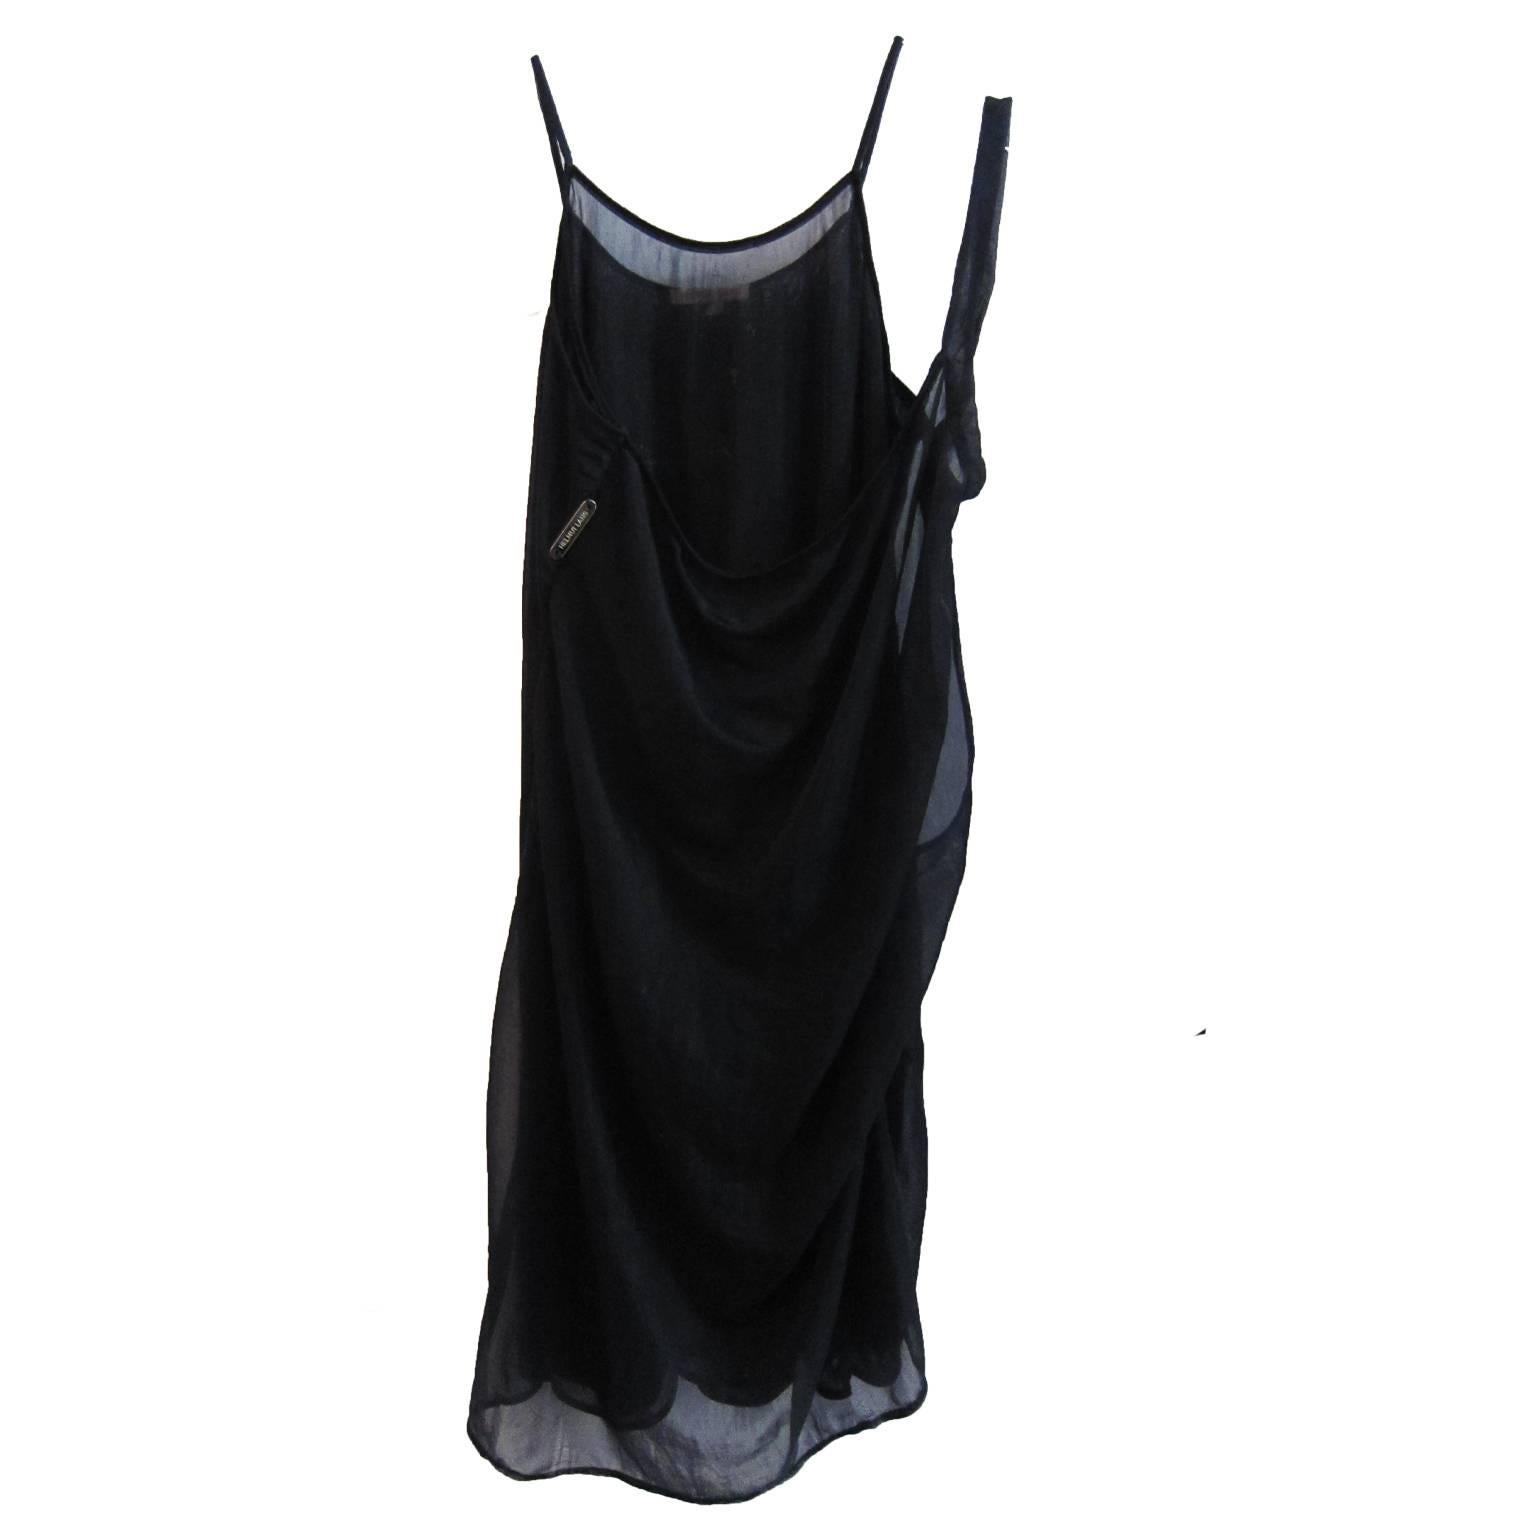 Helmut Lang archive asymmetric dark navy dress from SS 1995.
Size : It 40, US 6 